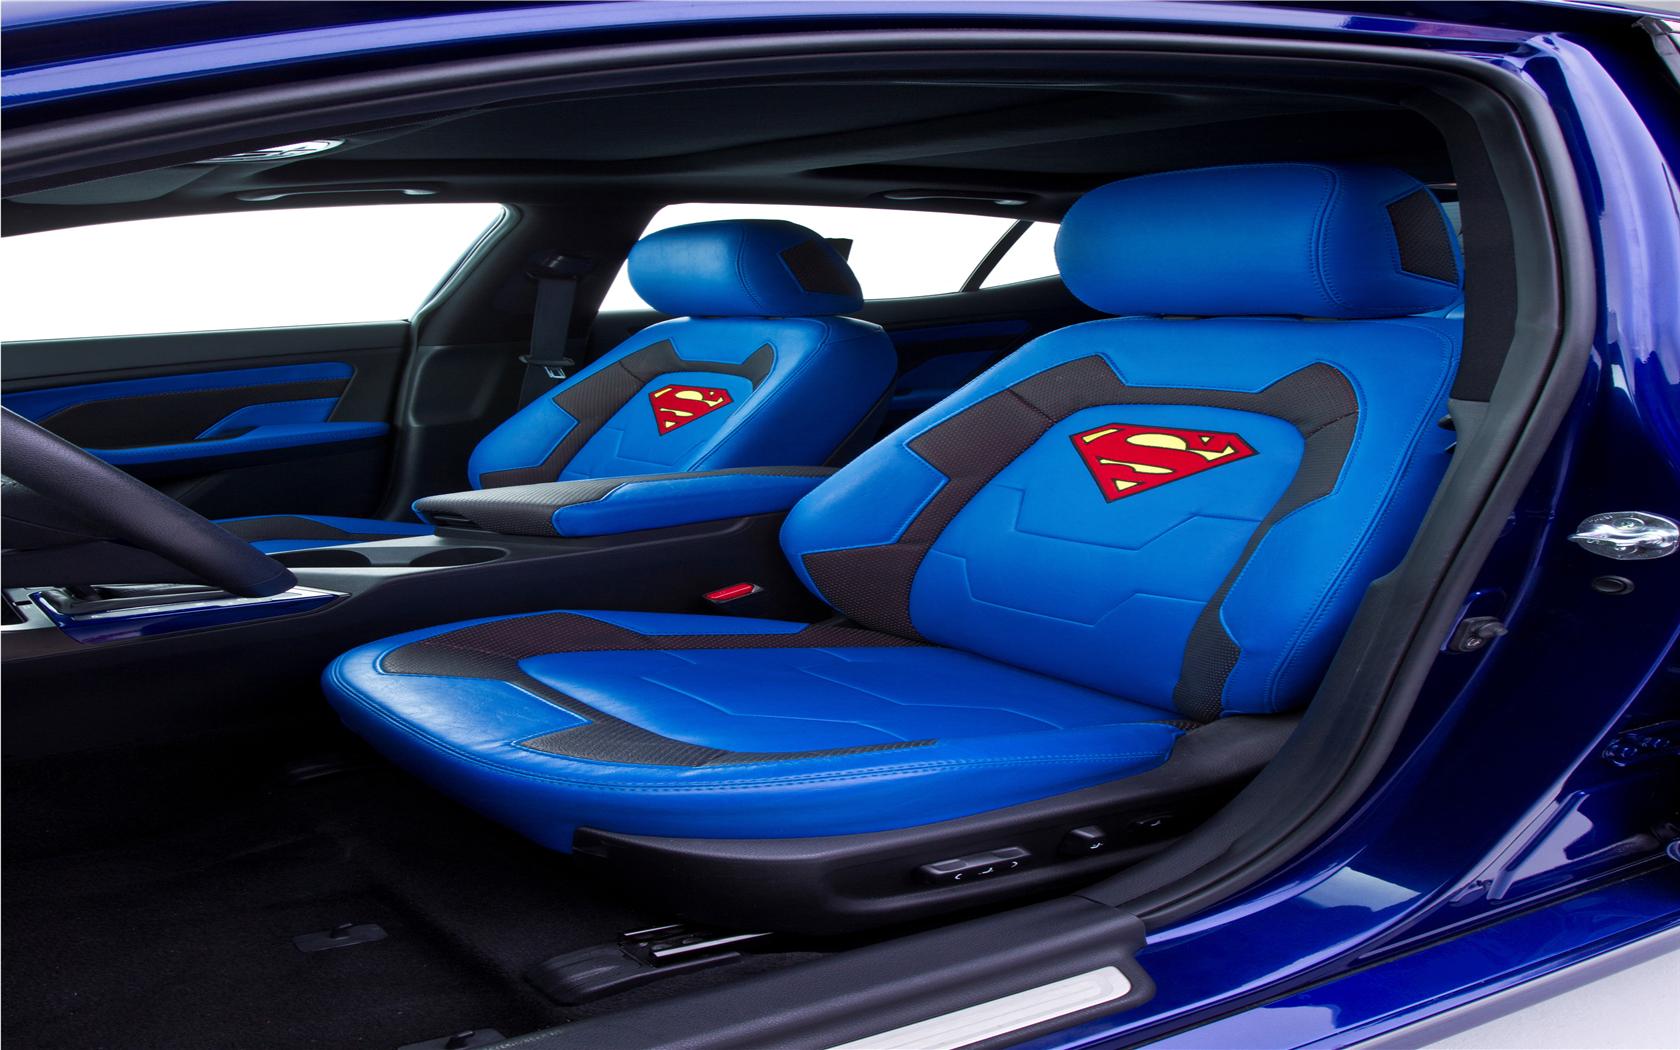 2013 Kia Optima Superman-Inspired